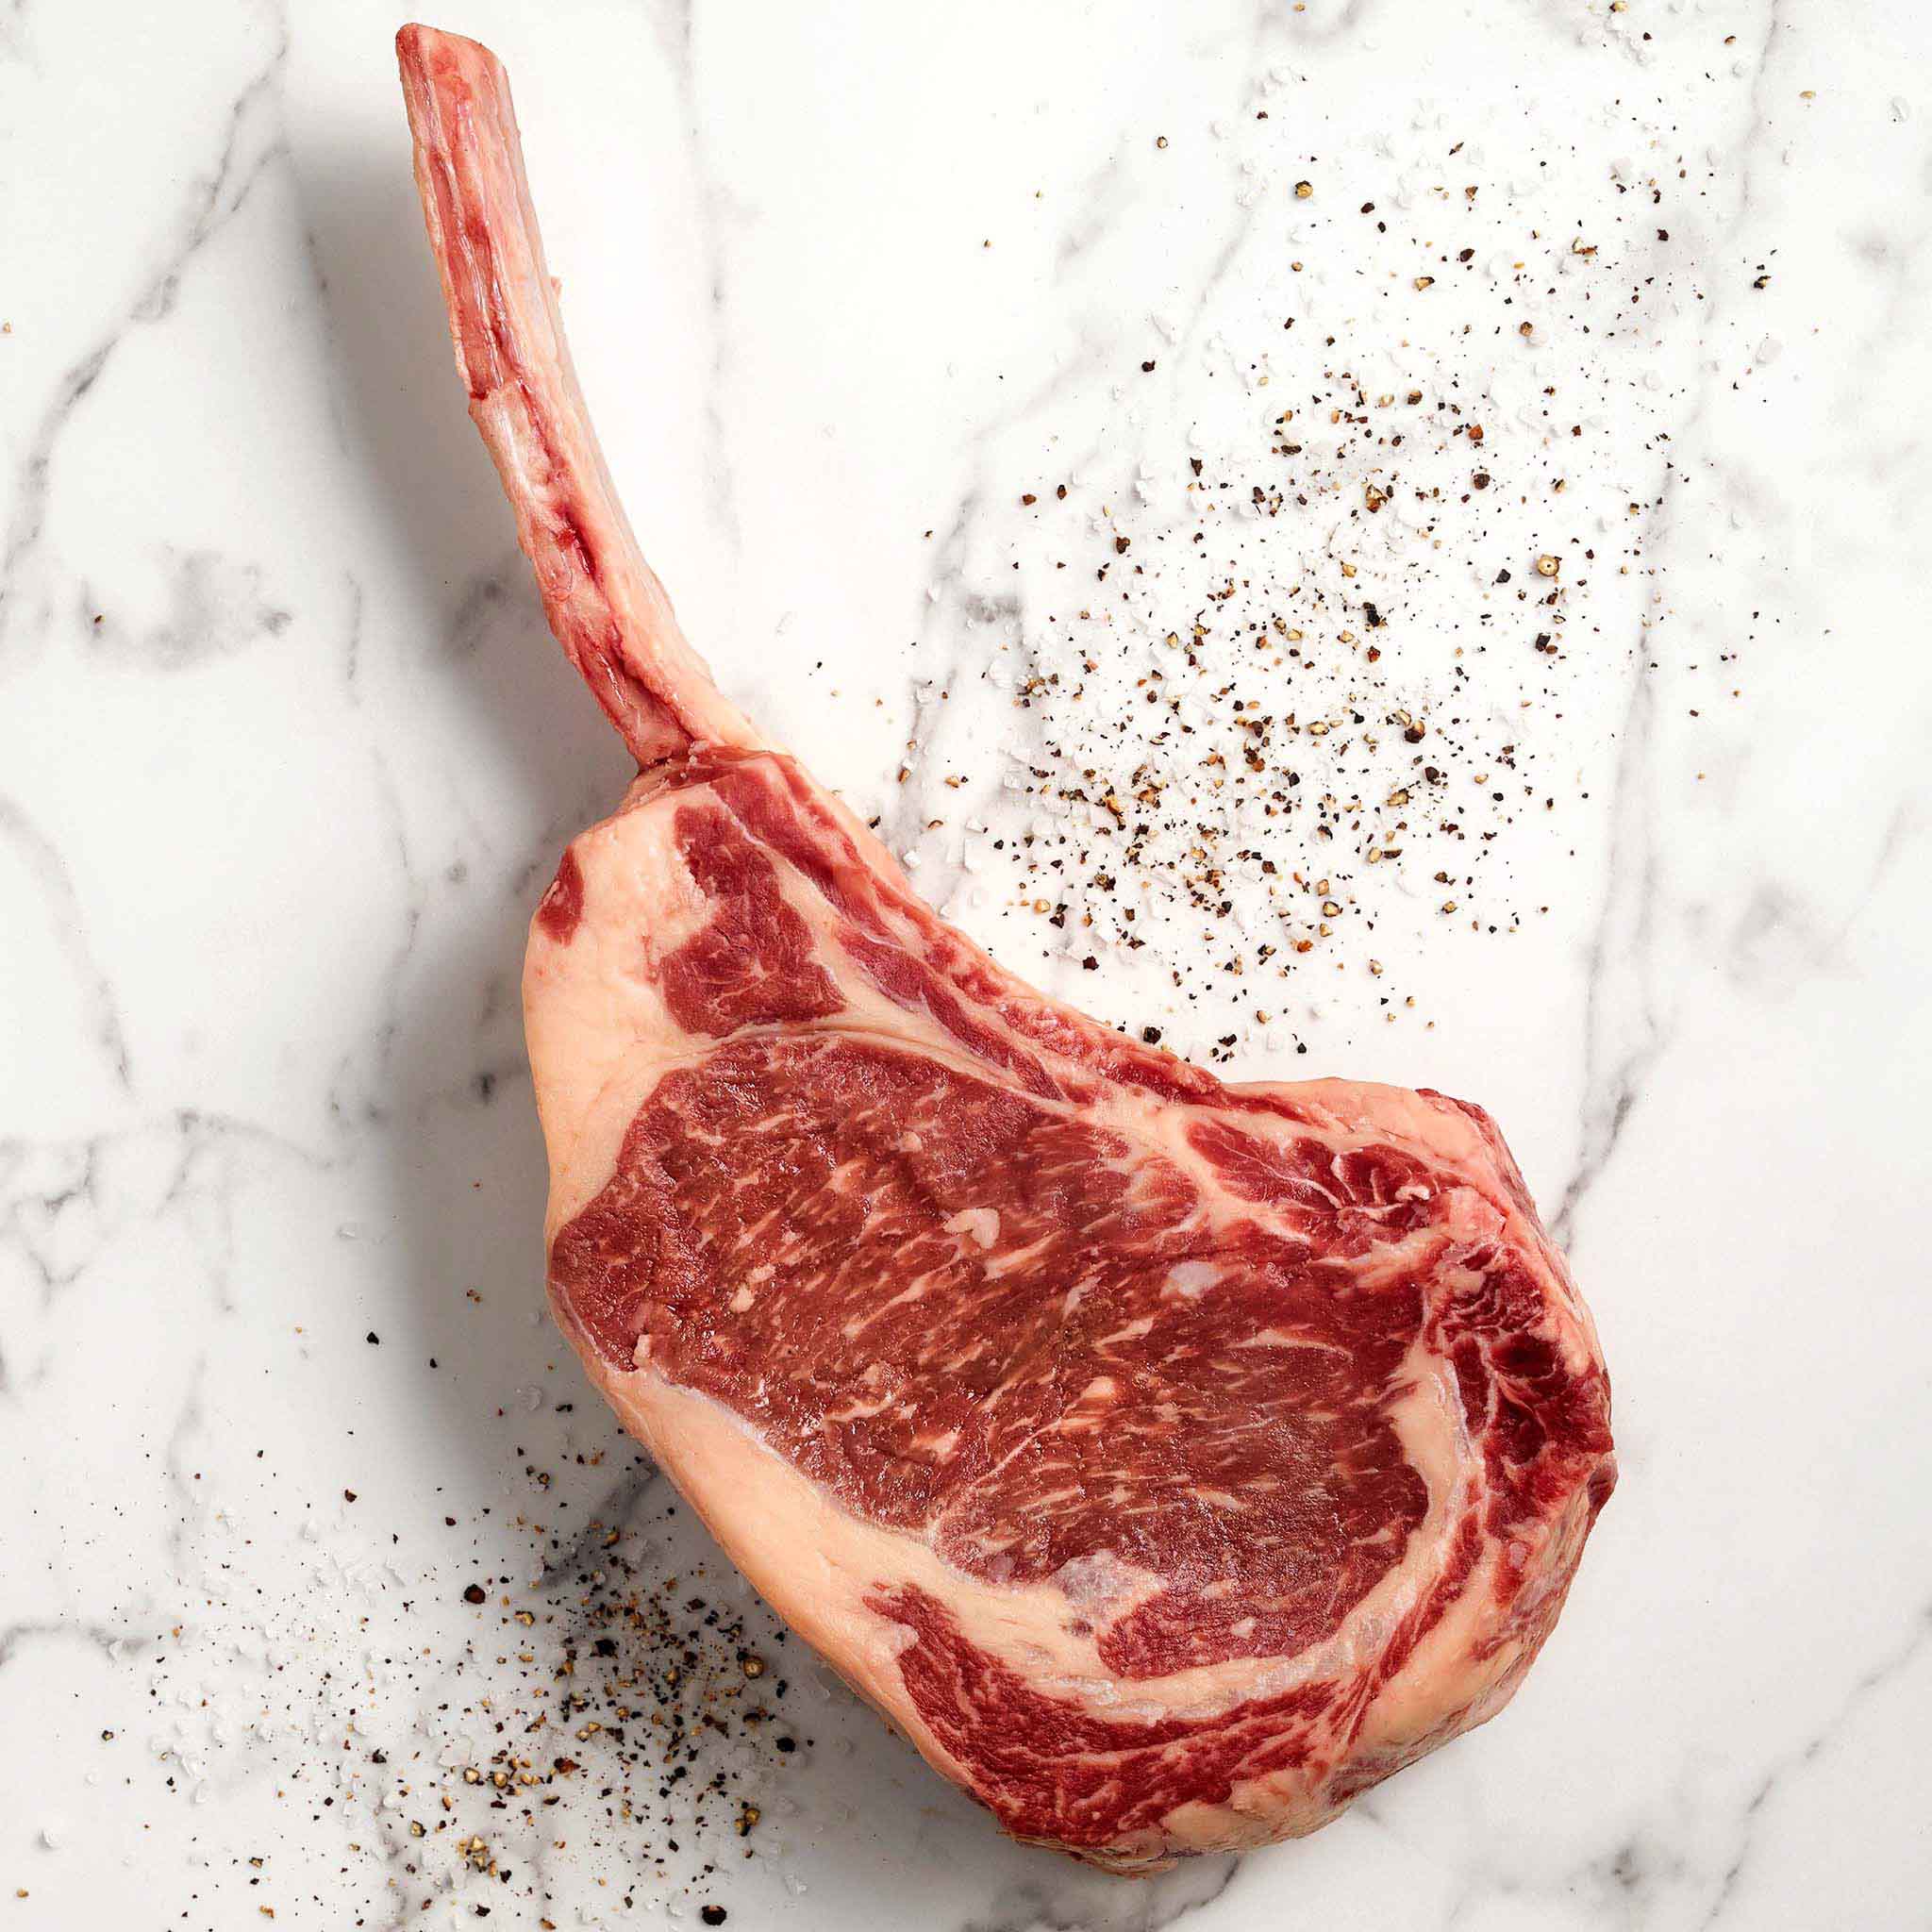 USDA Prime Beef Tomahawk Steak